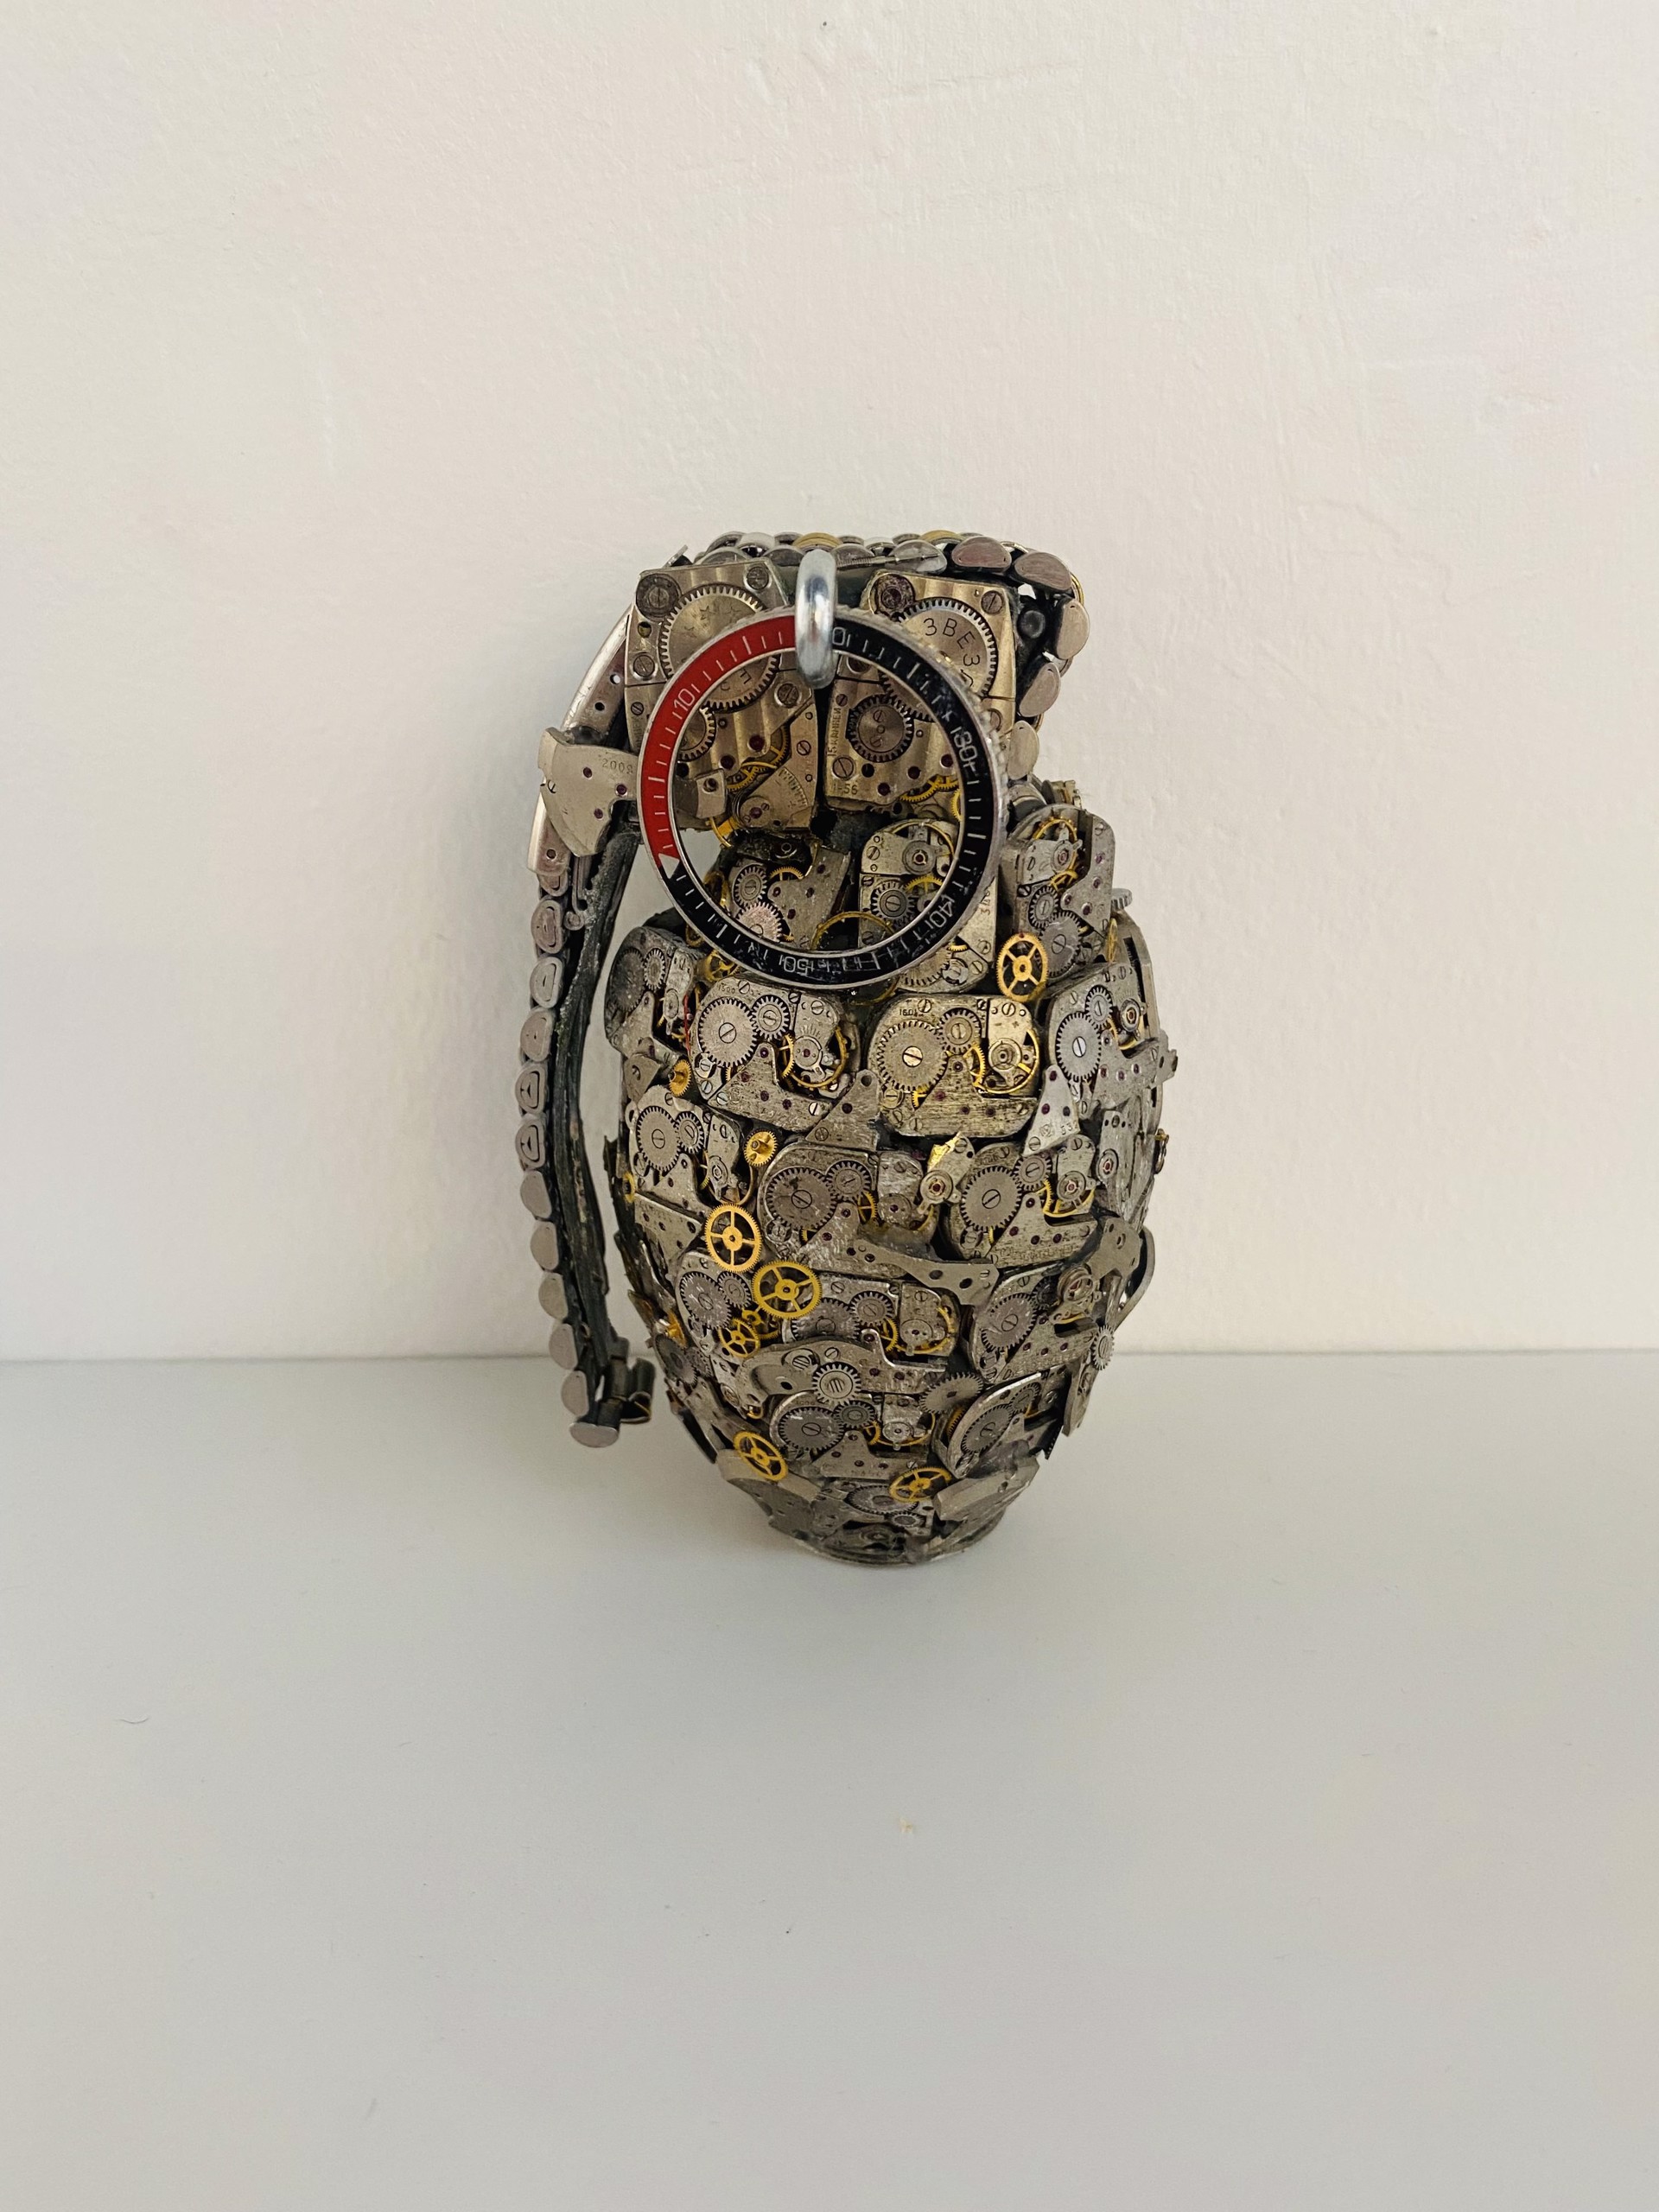 Time Bomb Grenade by Dan Tanenbaum